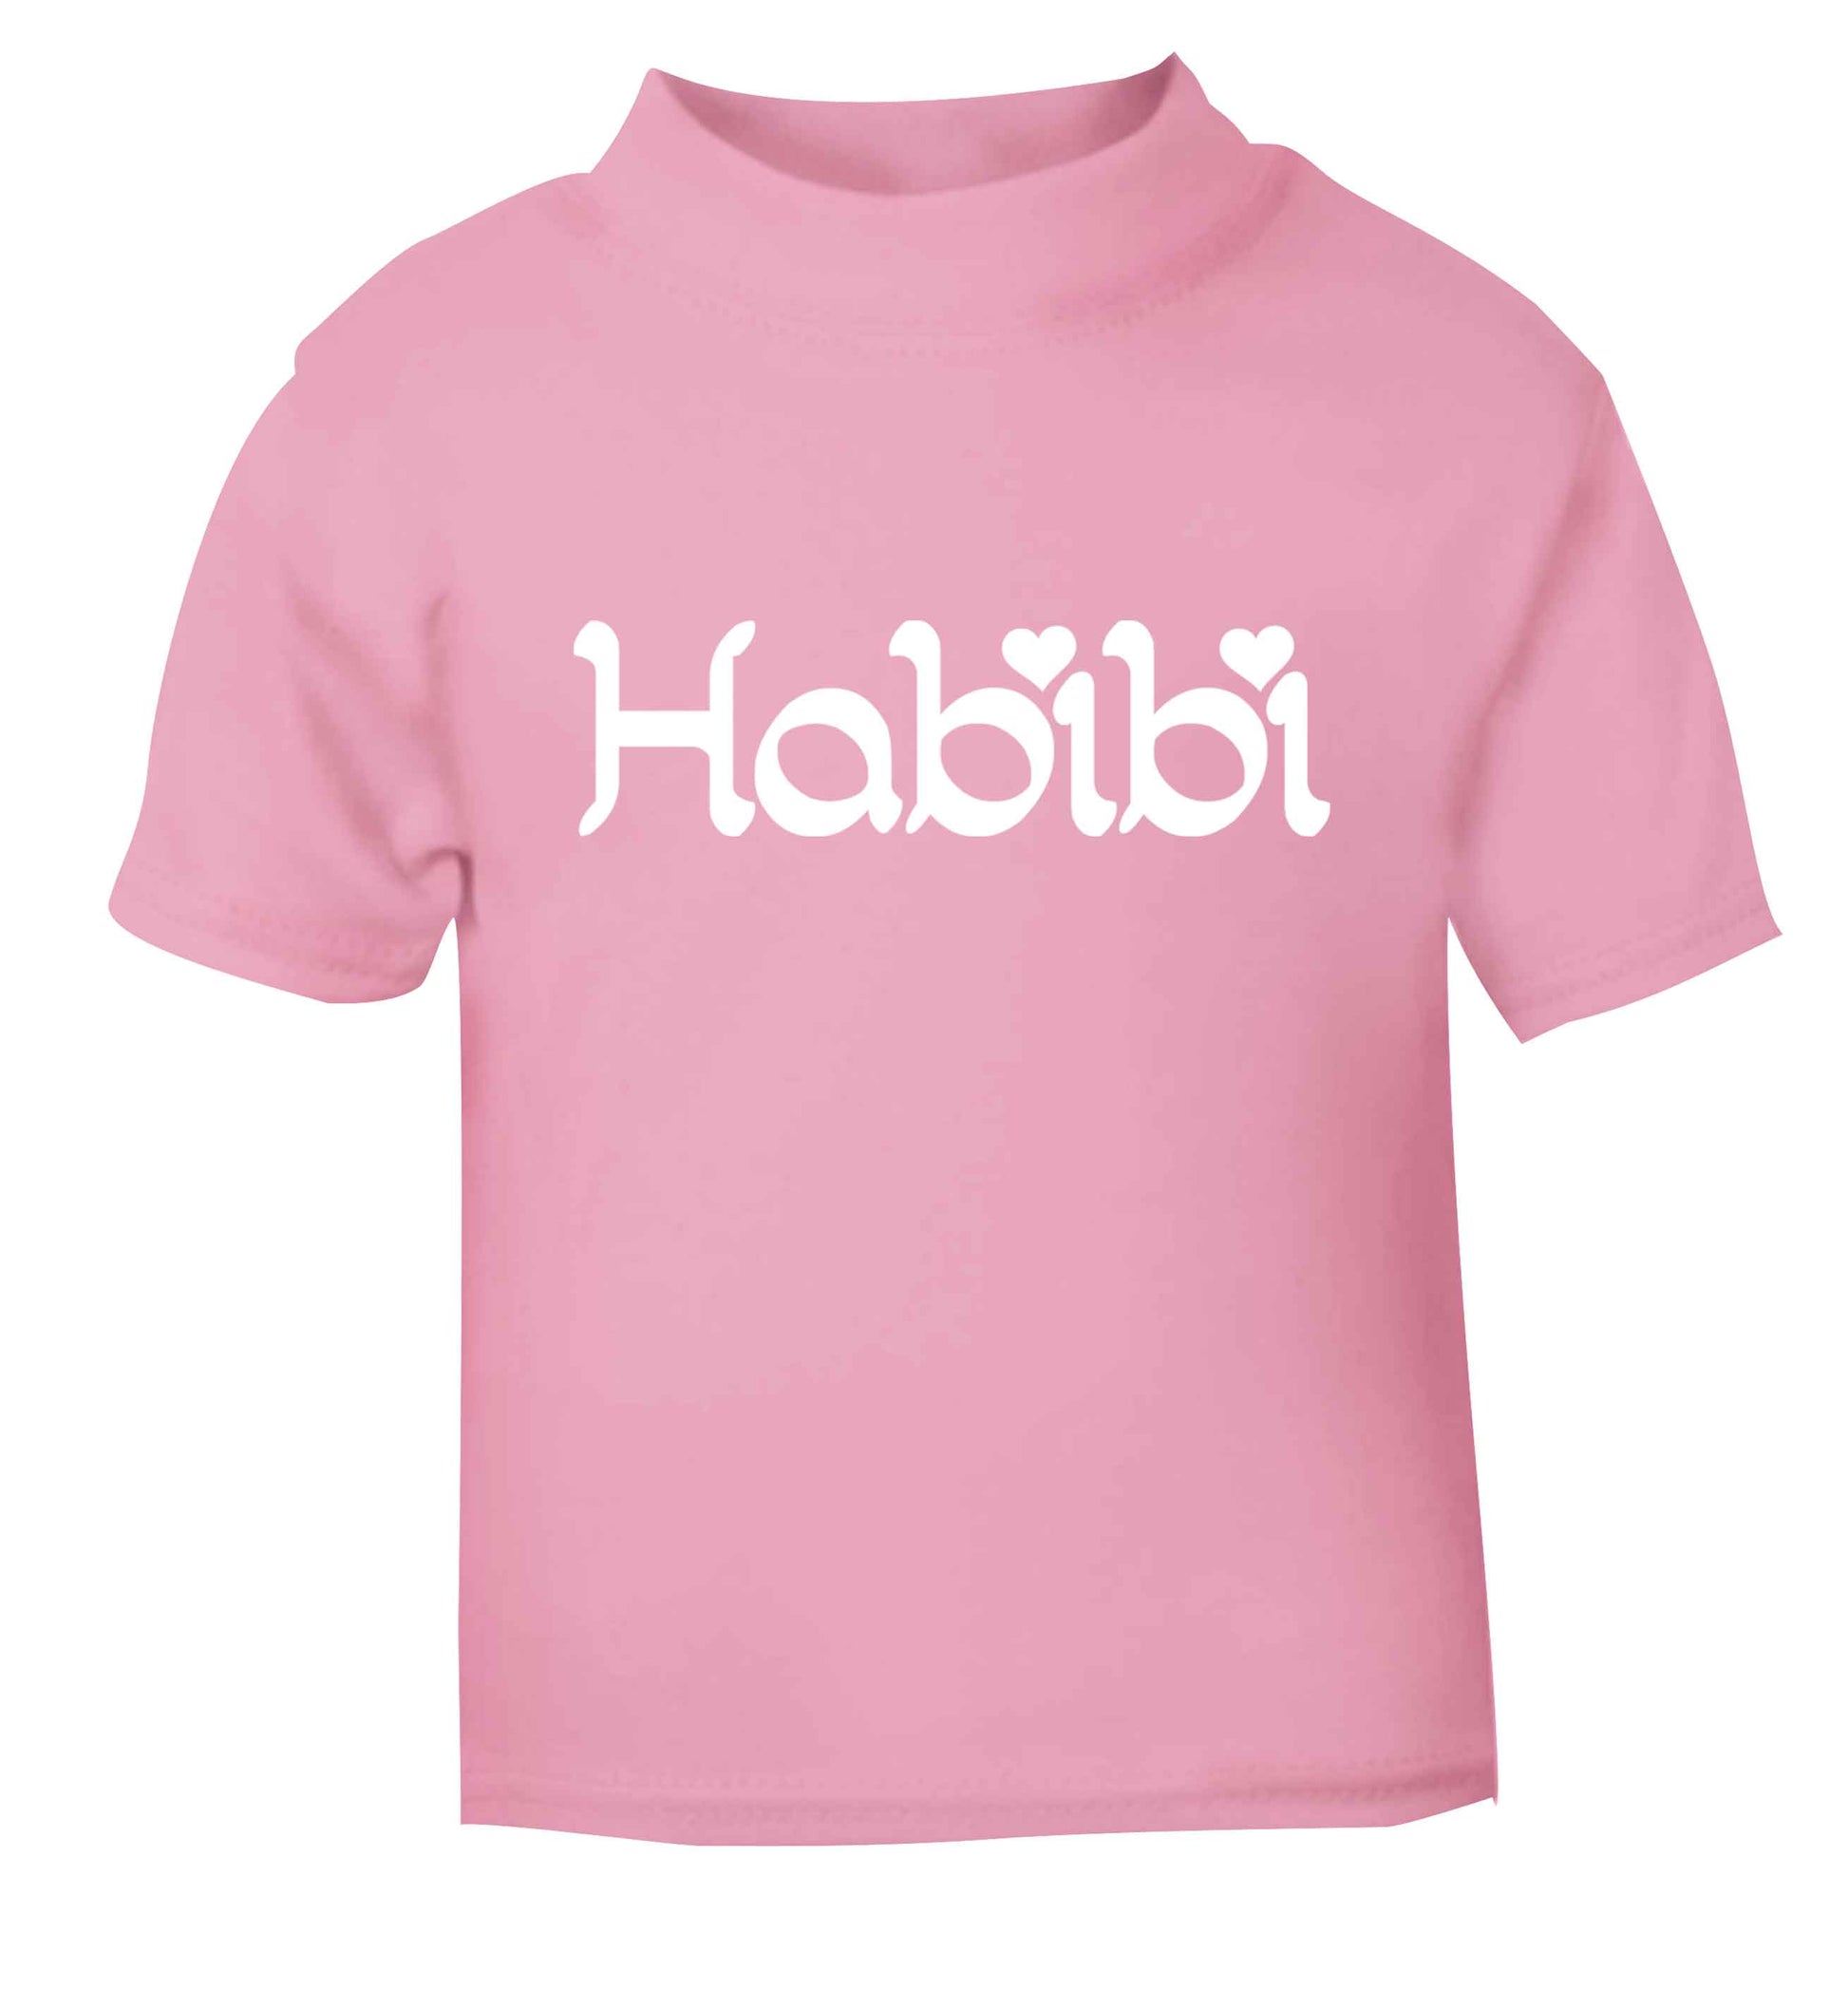 Habibi light pink baby toddler Tshirt 2 Years